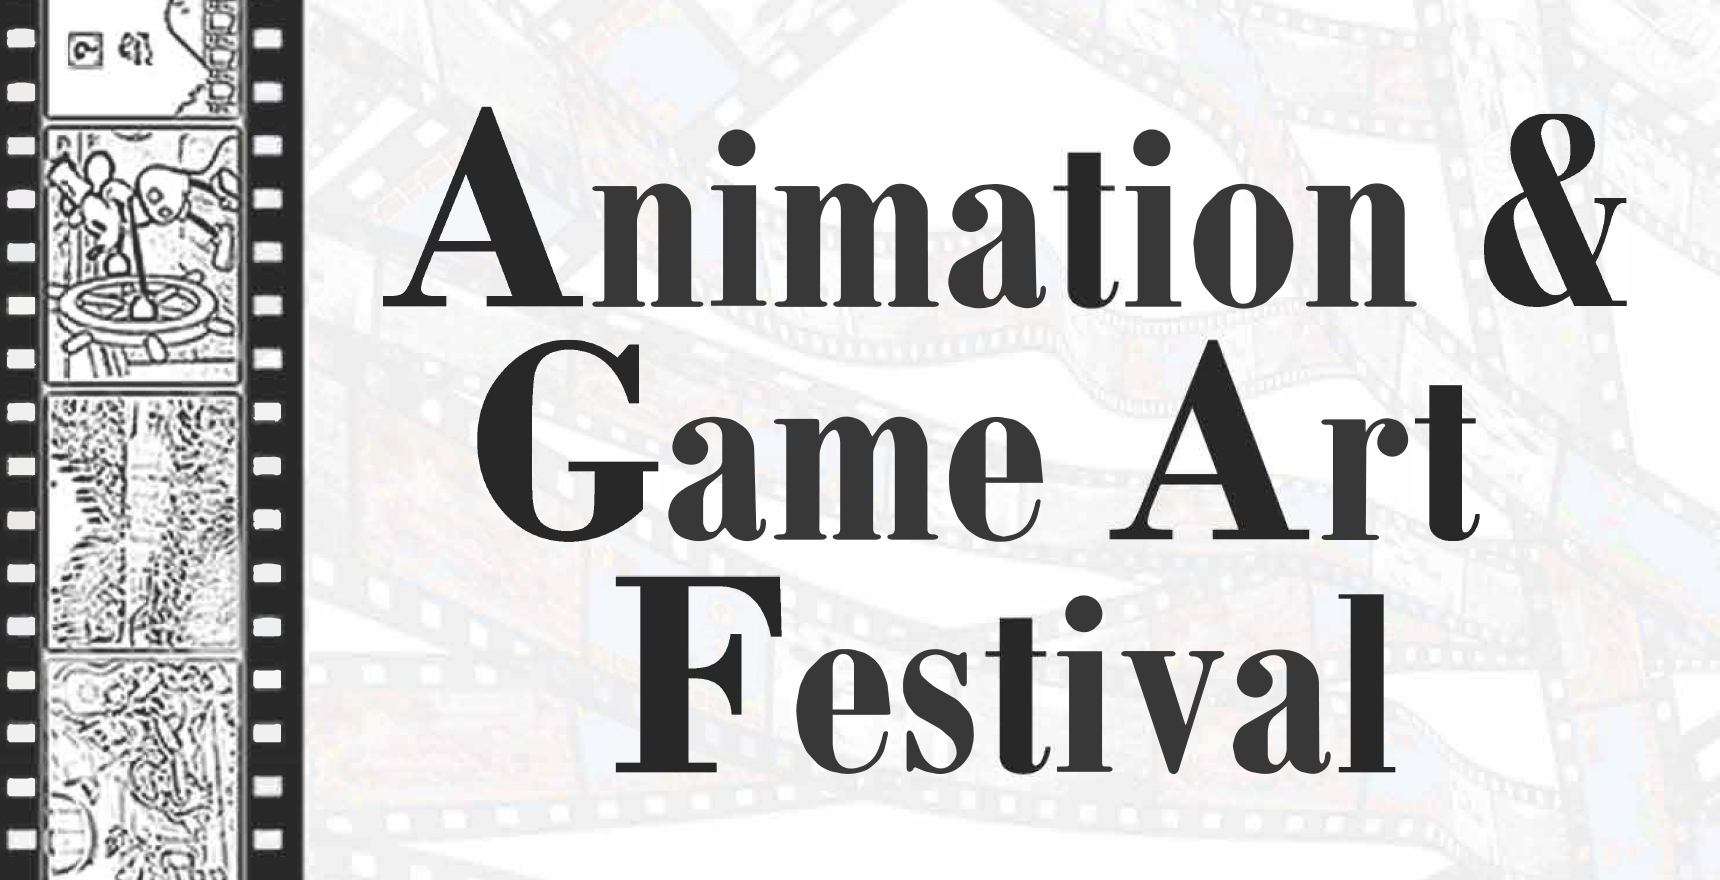 Animation Festival graphic